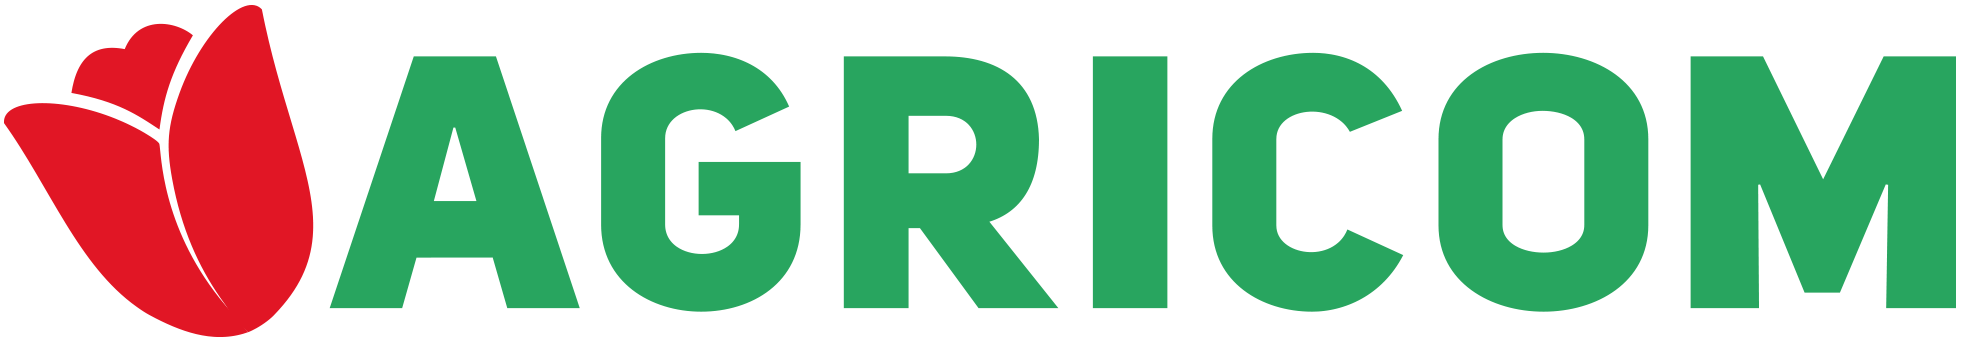 AGRICOM-logo-web